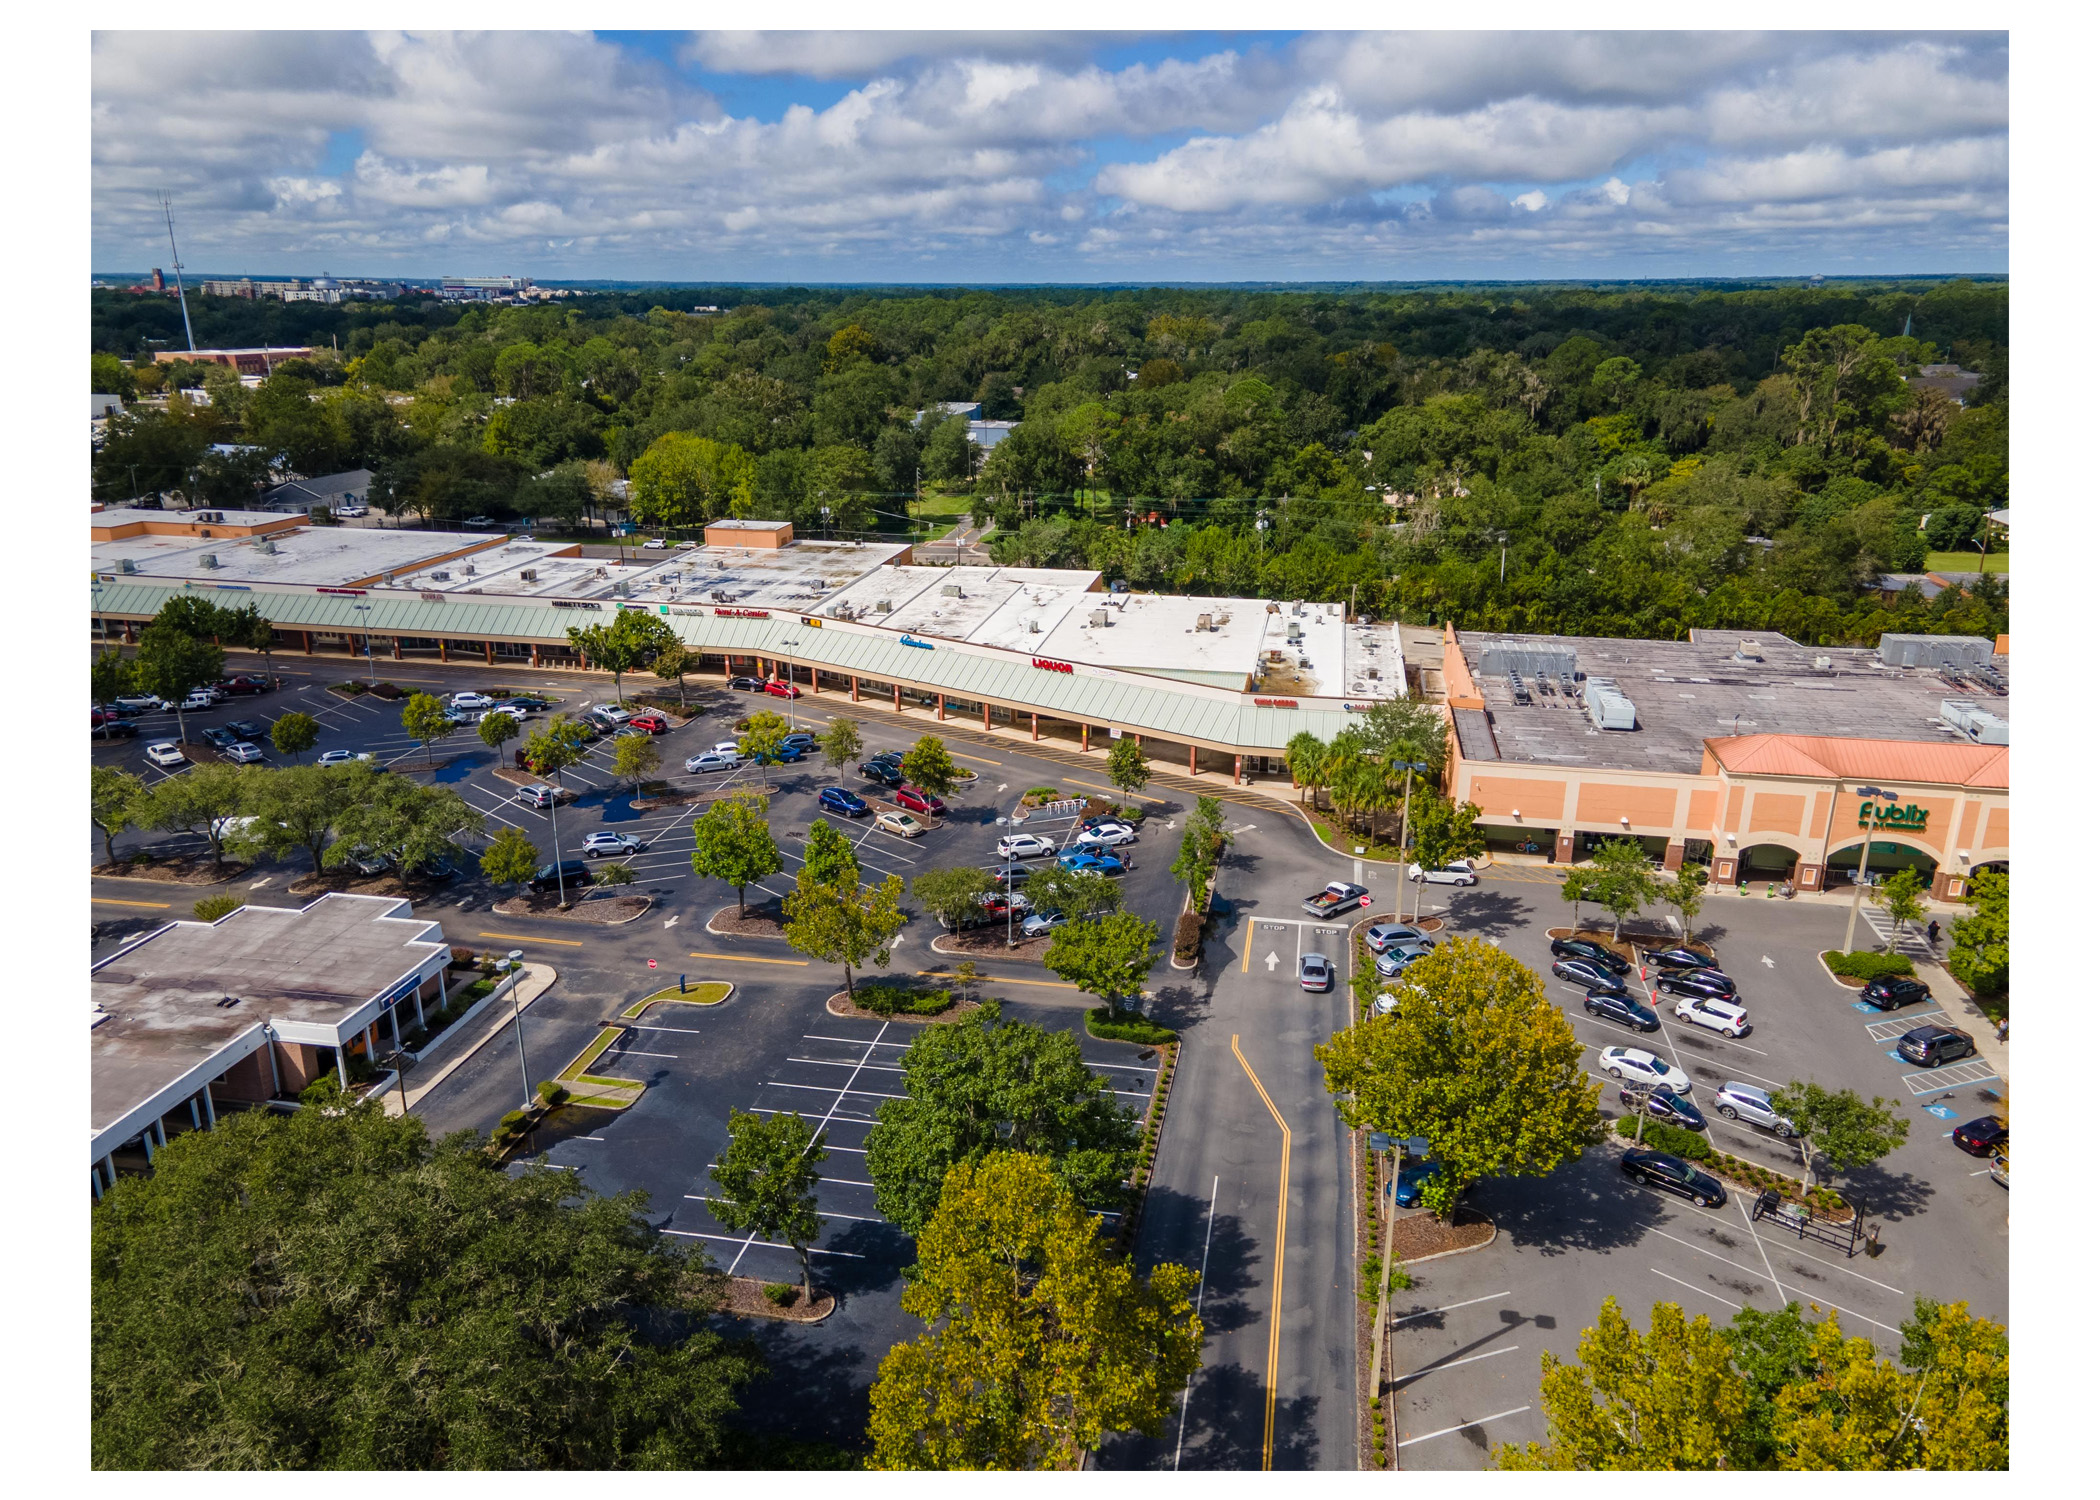 Gainesville Shopping Center, Publix, PNC Bank, Liquor and parking lot aerial view.